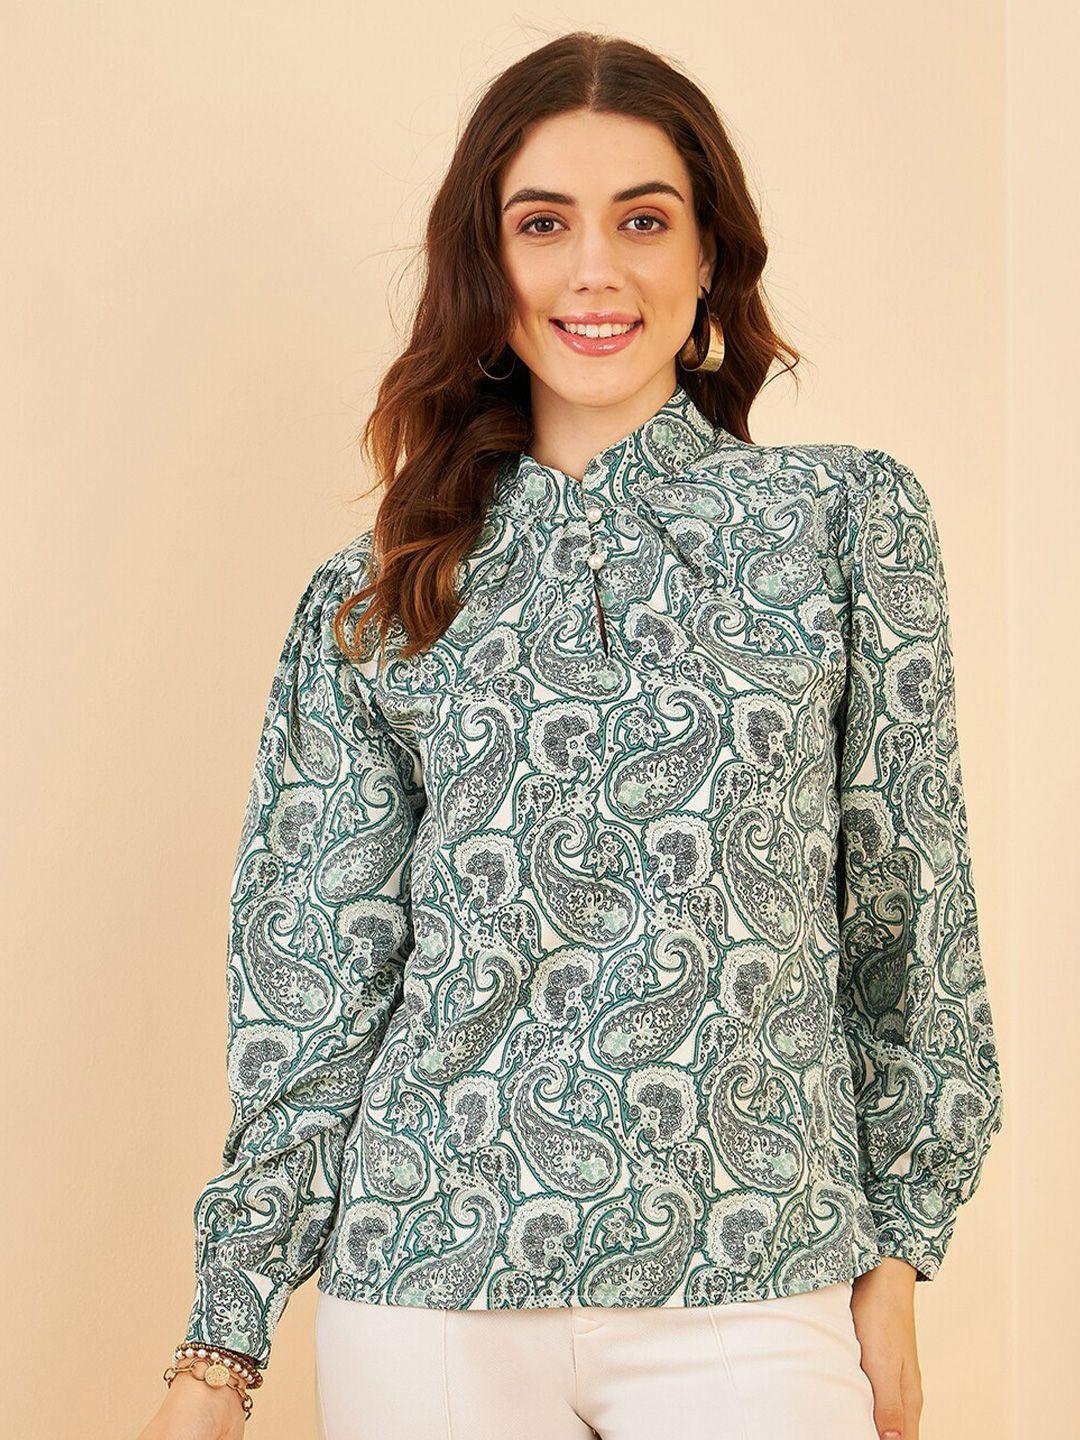 carlton london floral print mandarin collar ethnic crepe shirt style top